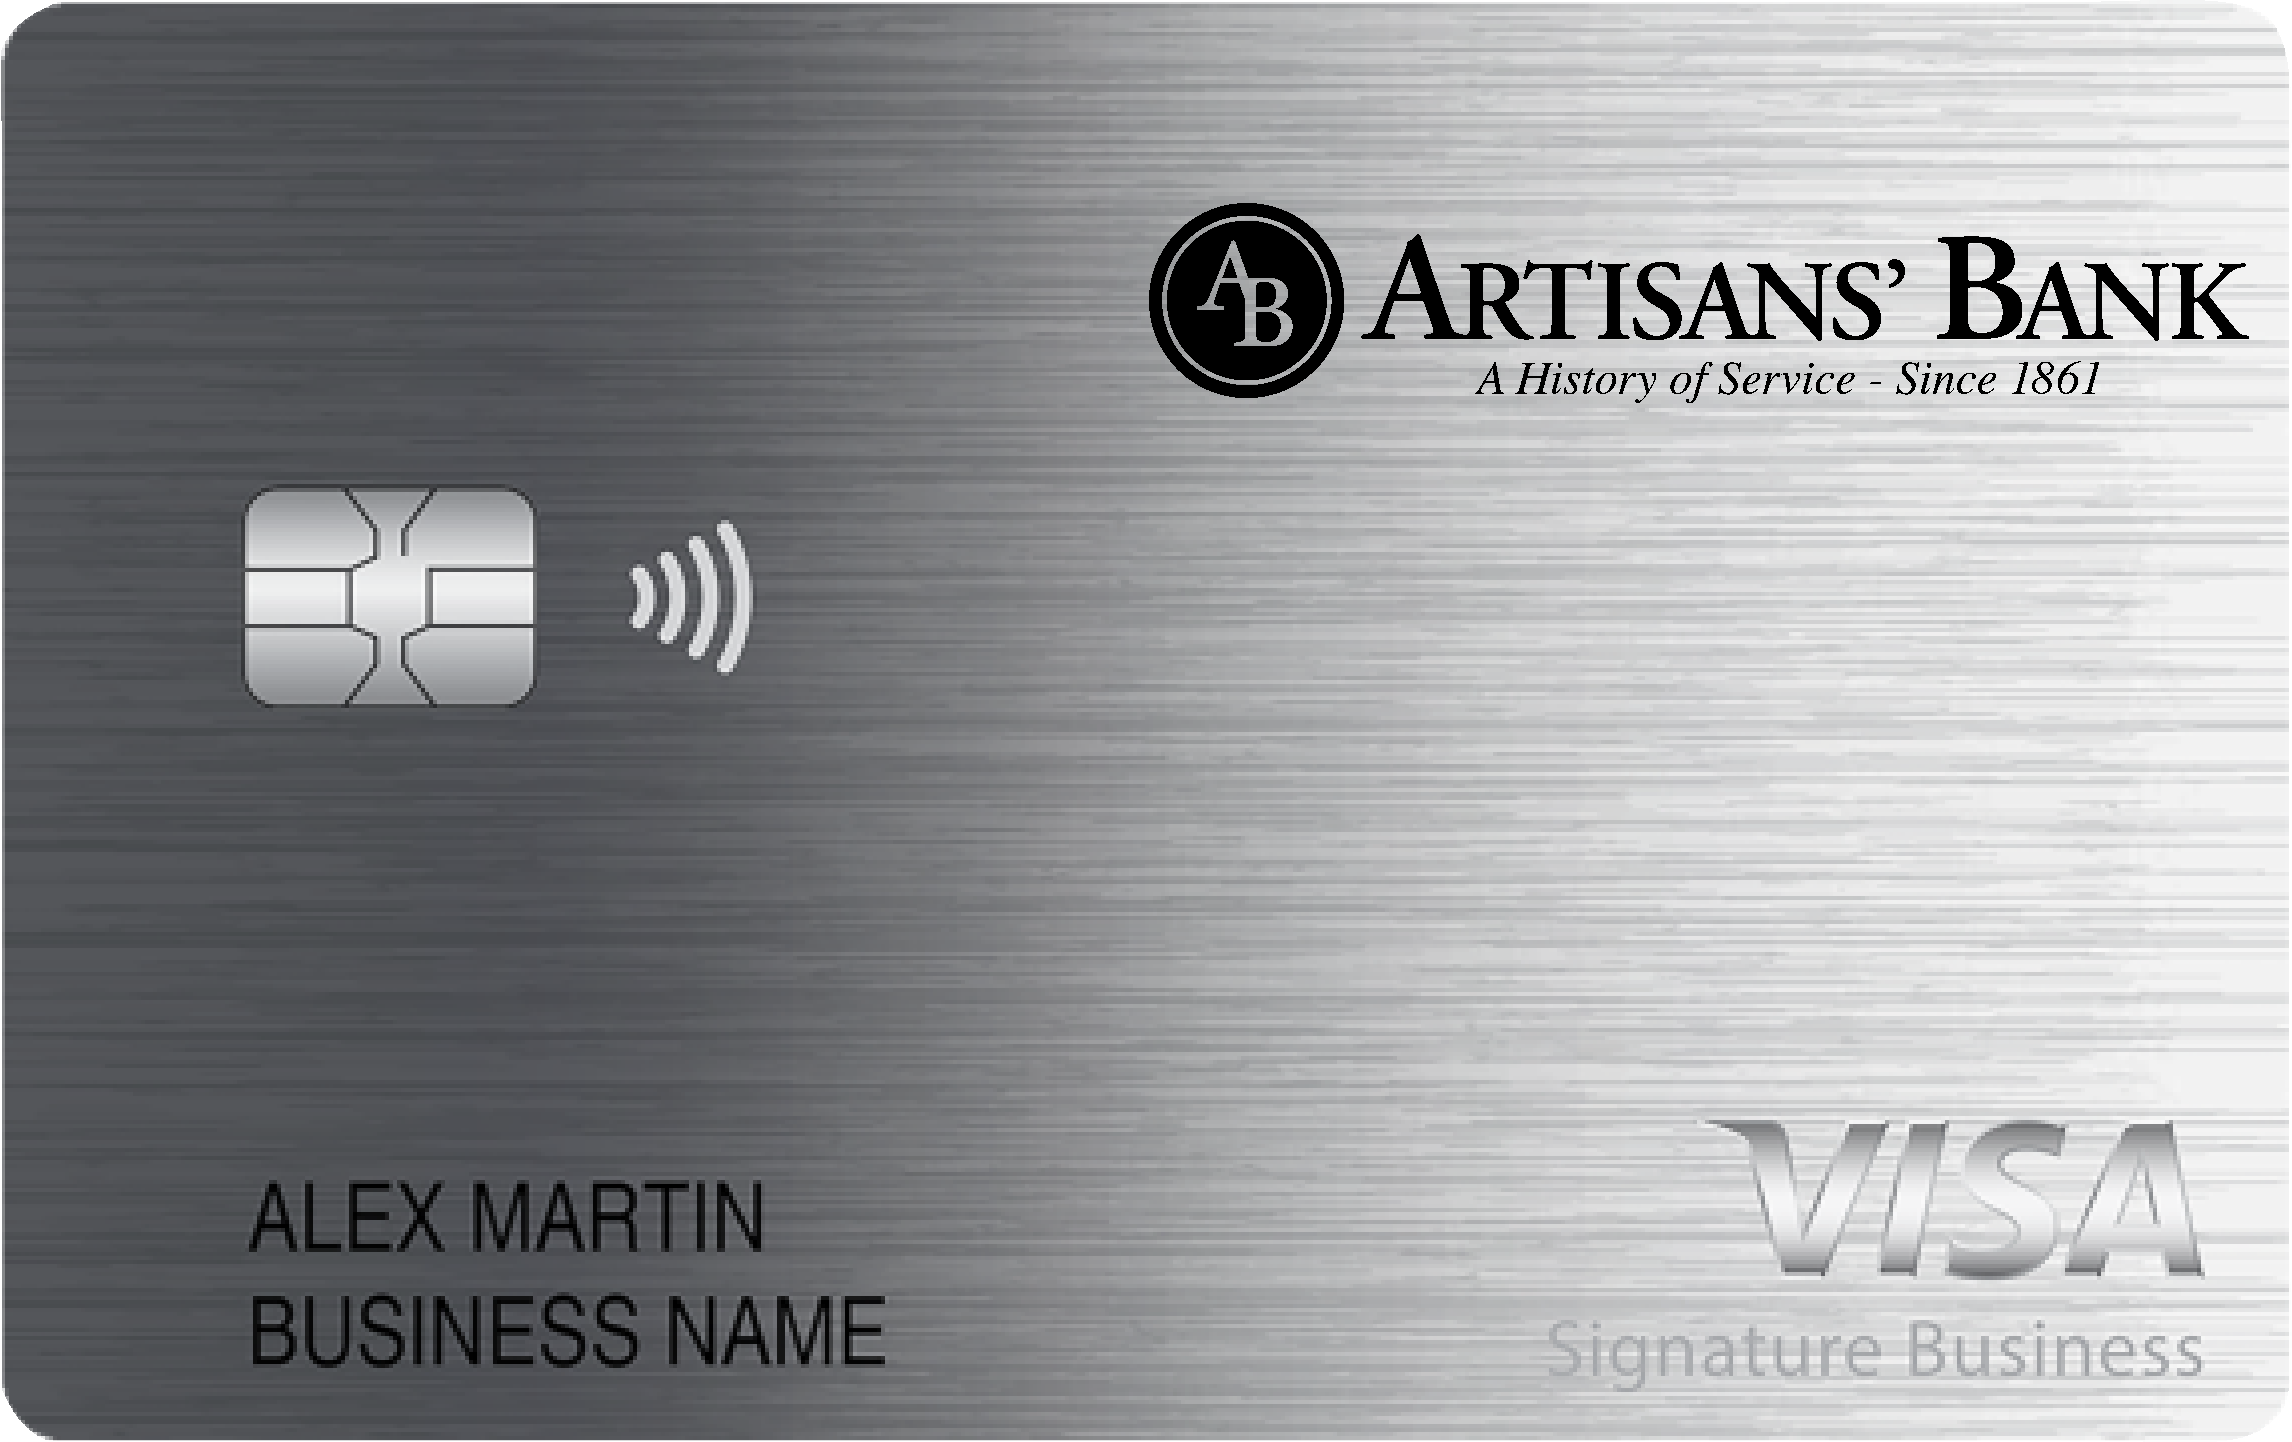 Artisans' Bank Smart Business Rewards Card